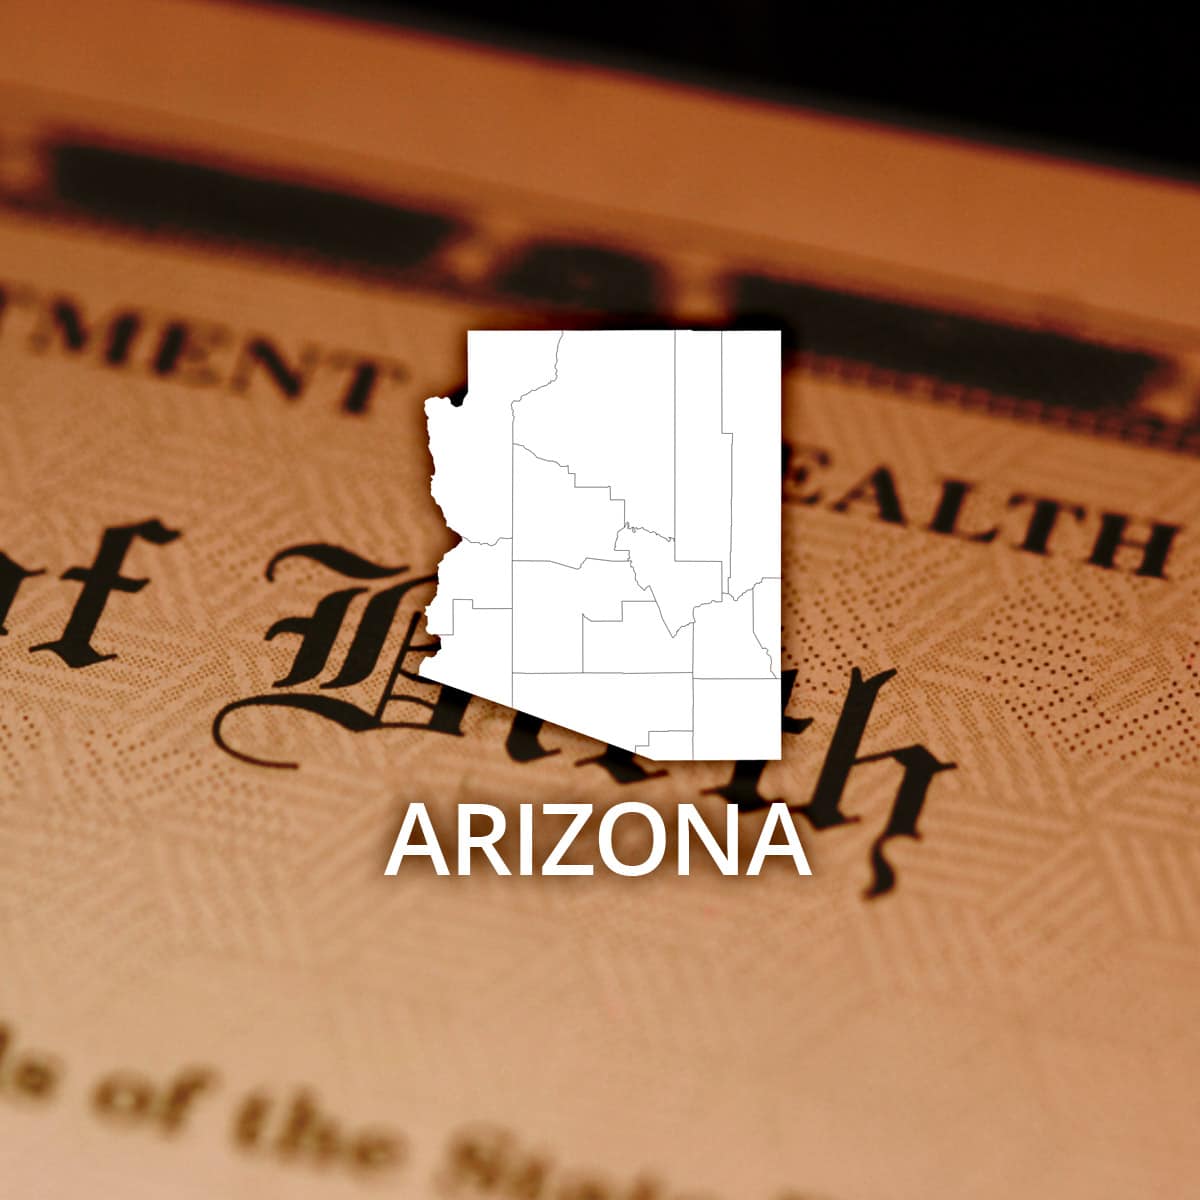 arizona public records